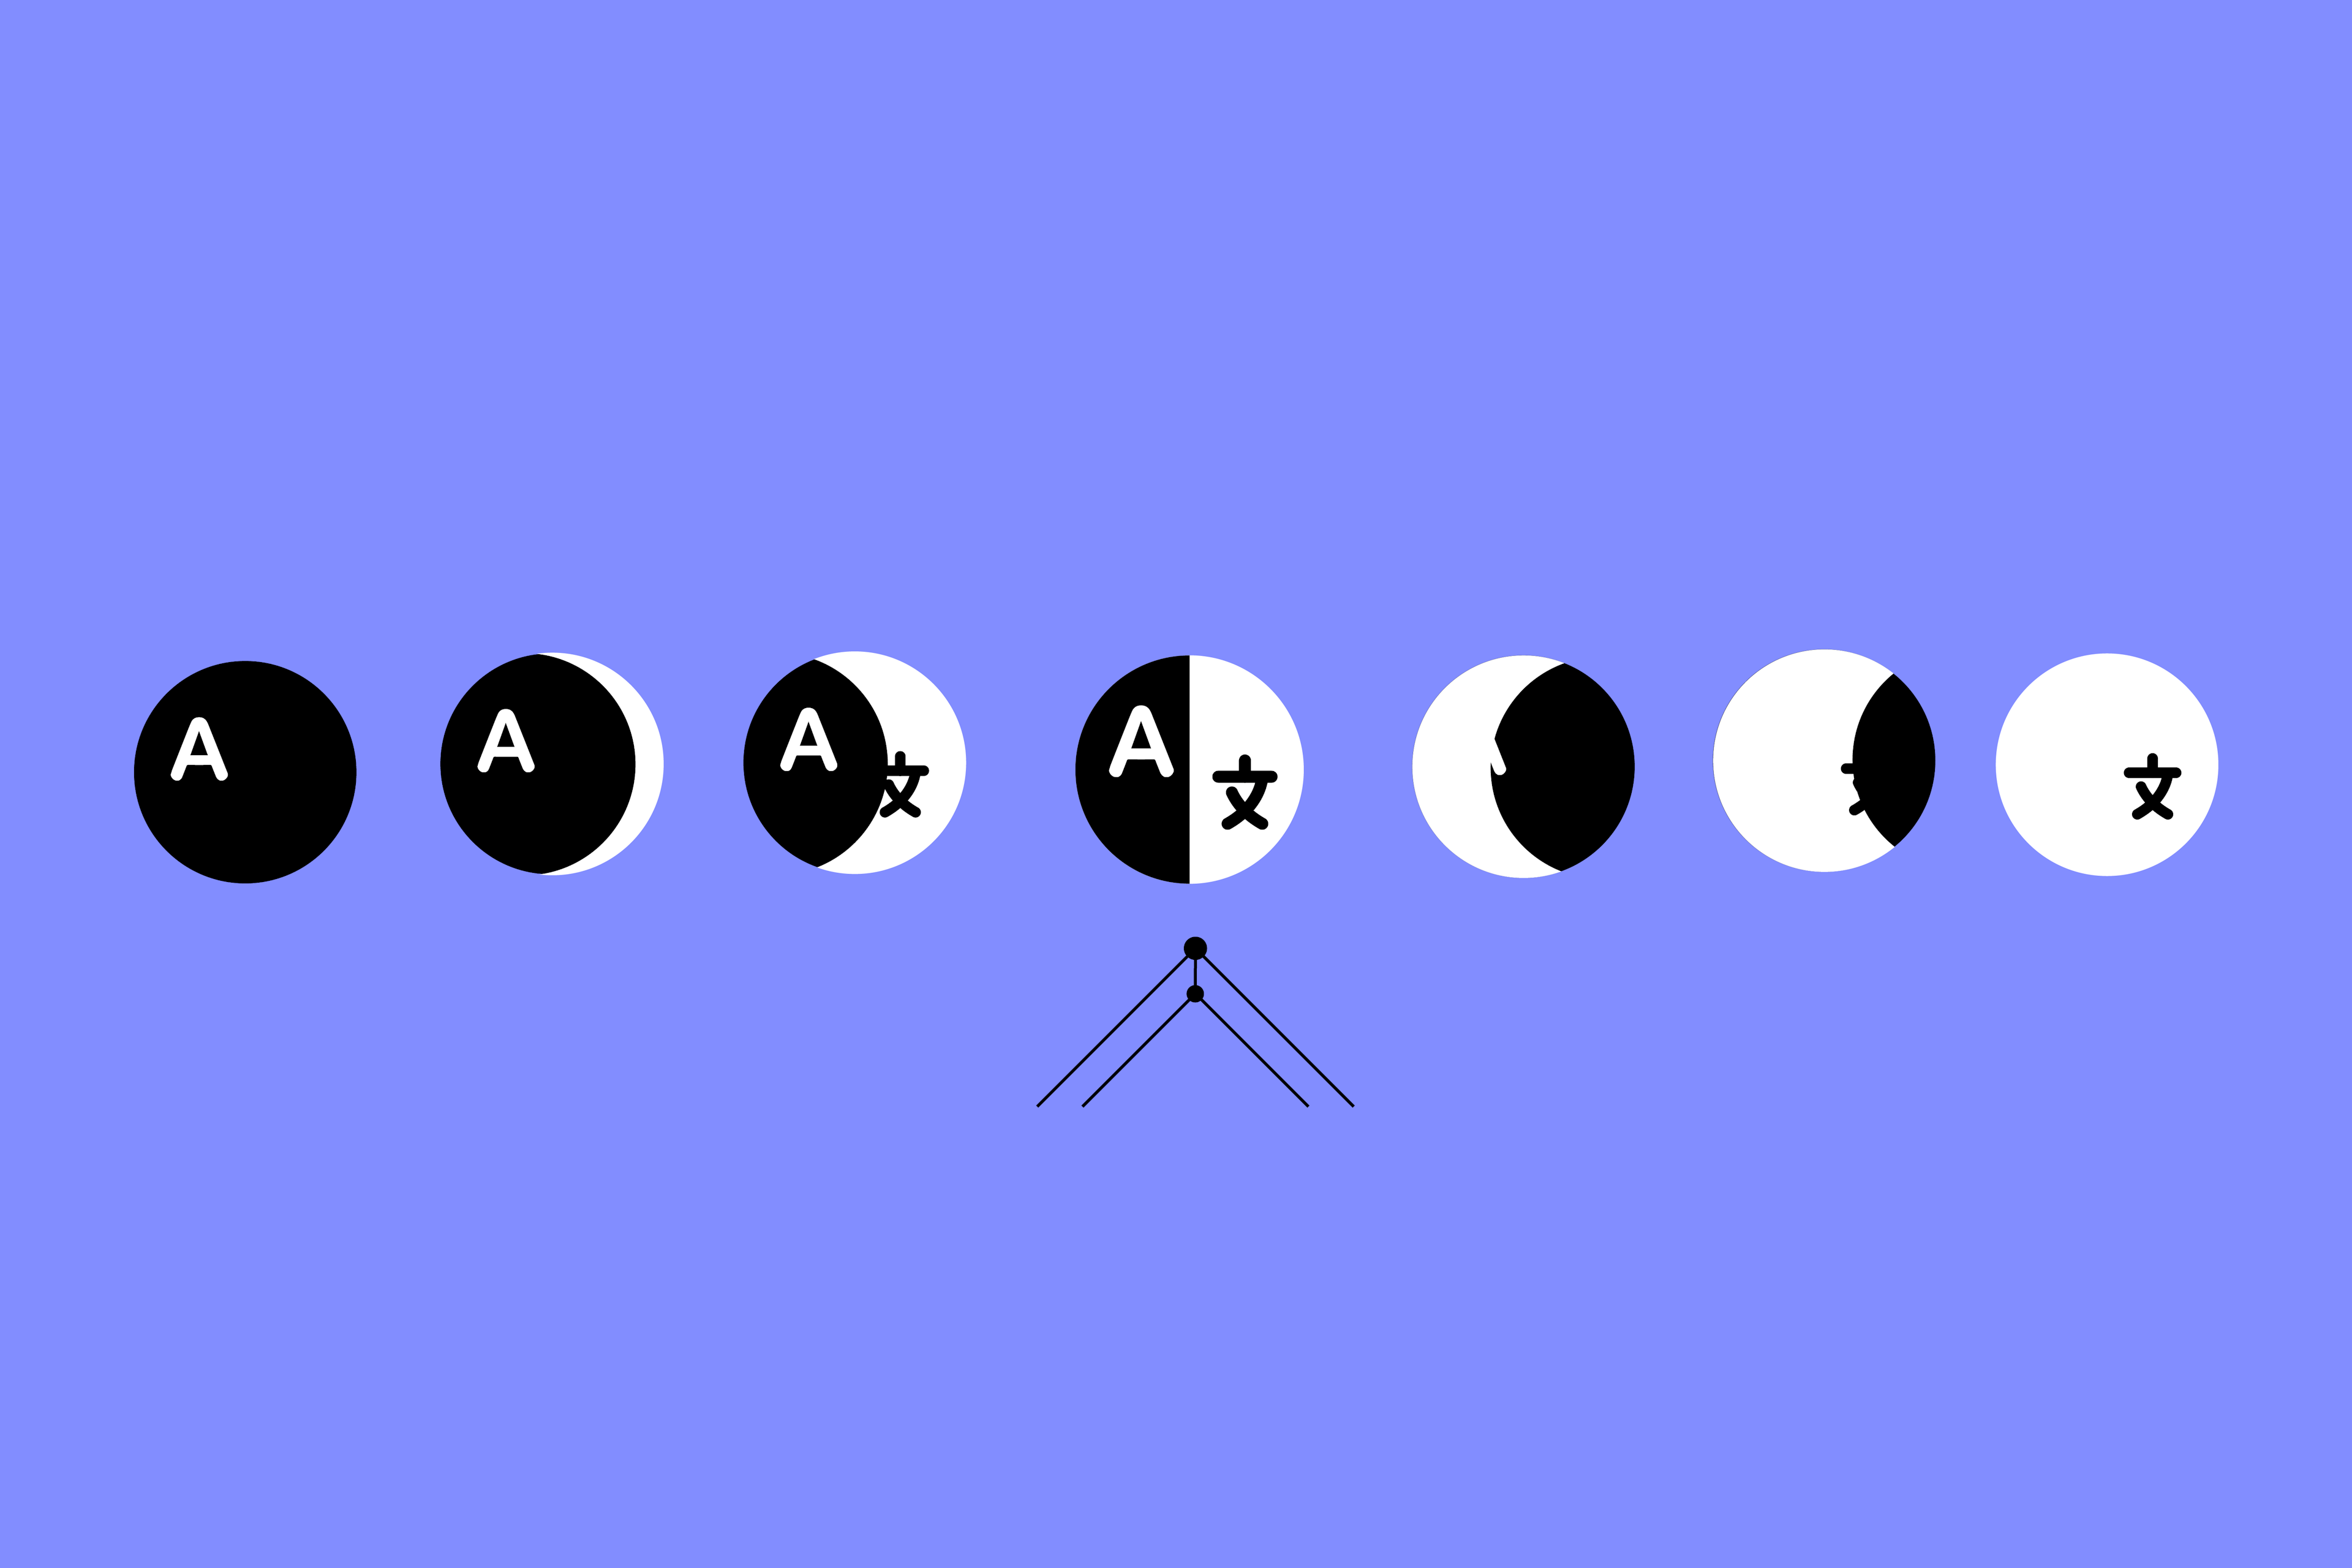 abstract image illustrating language i/o's tech